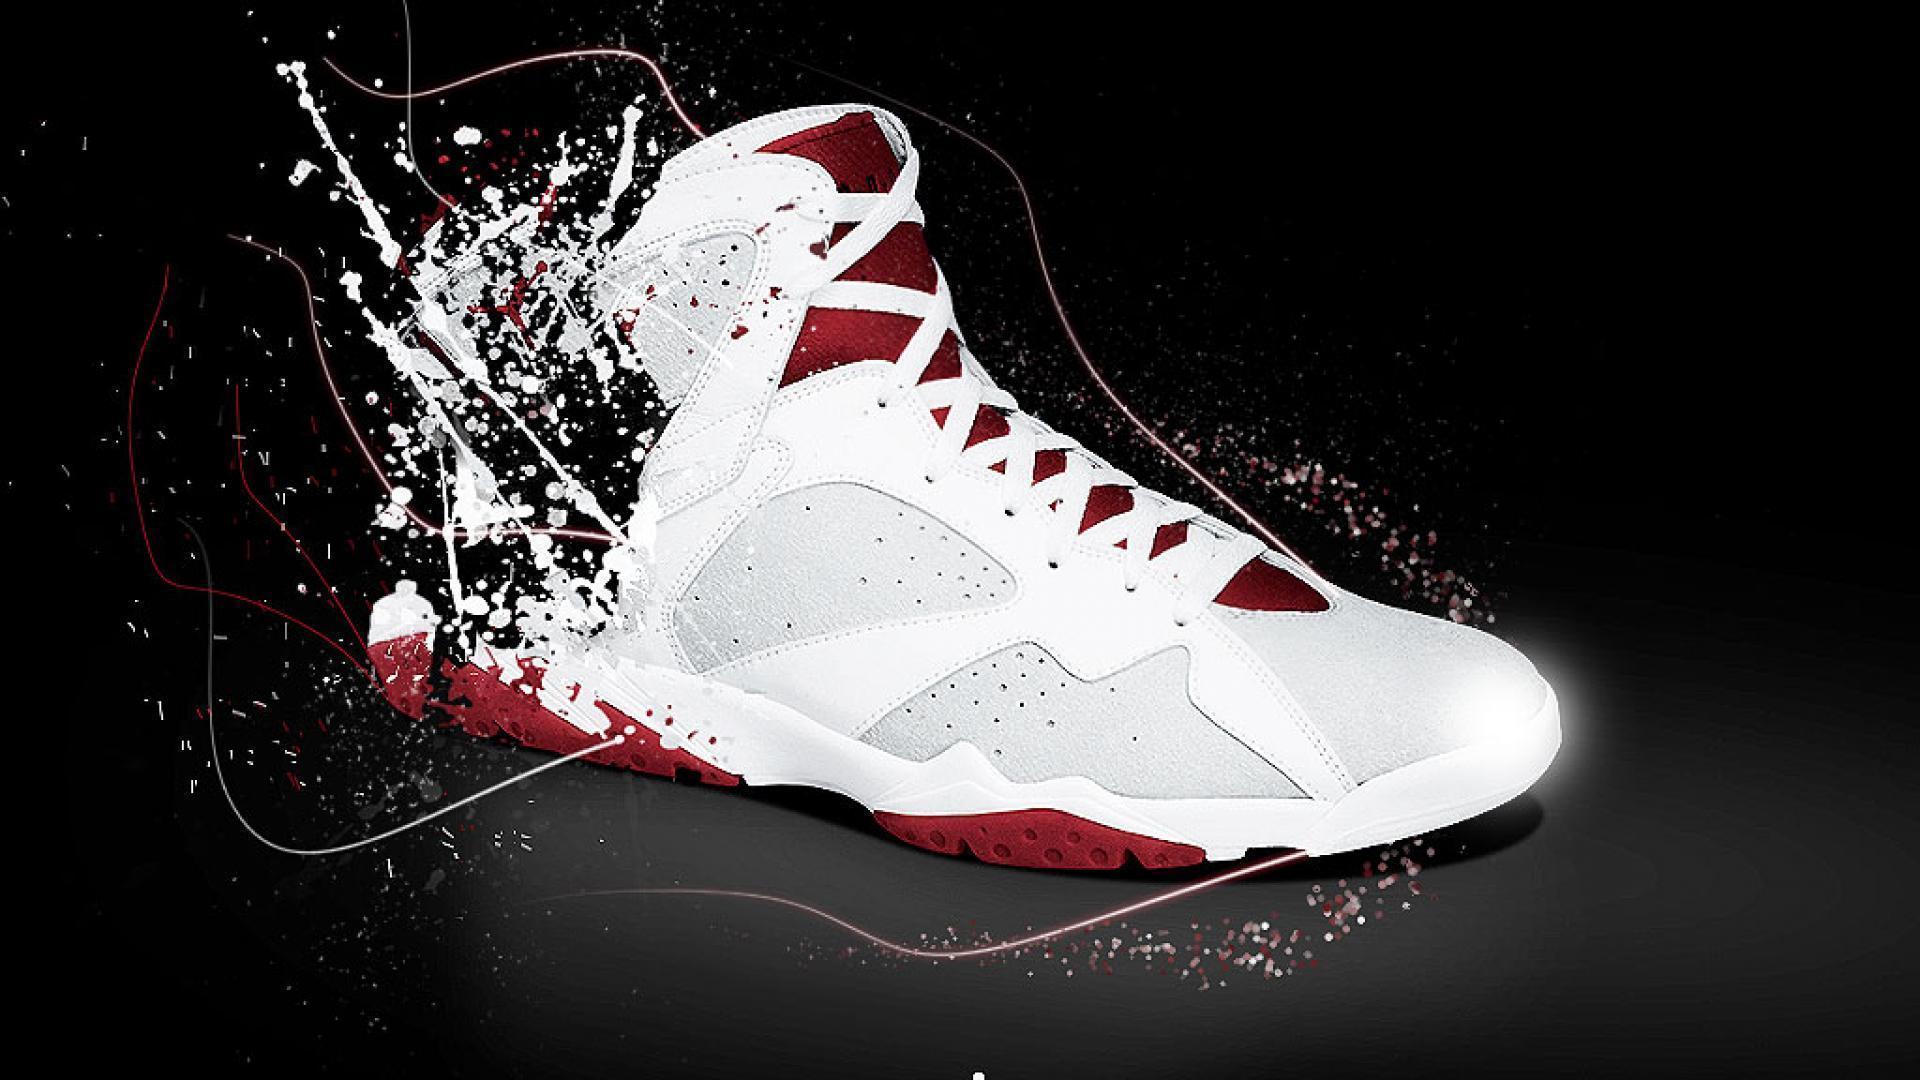 Jordan Sneakers Wallpaper HD Widescreen Background